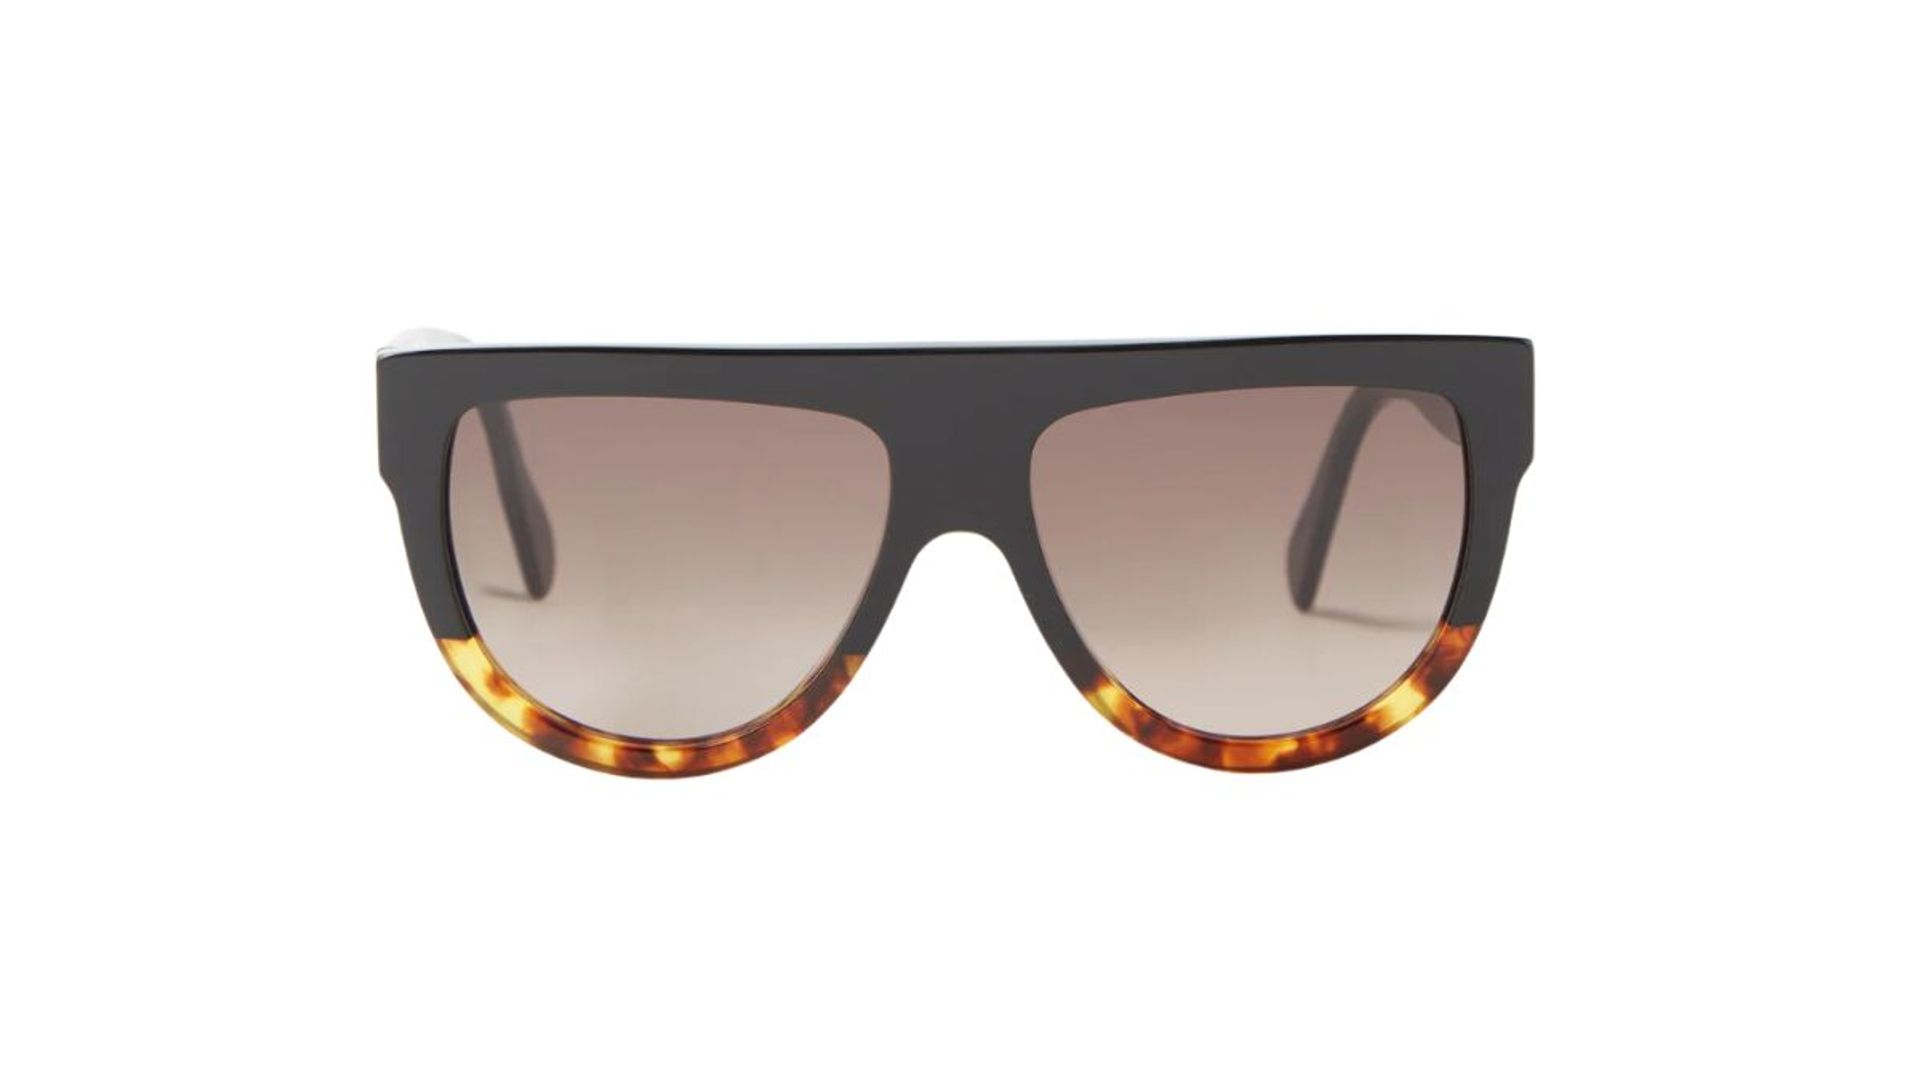 D-frame acetate sunglasses - Celine 